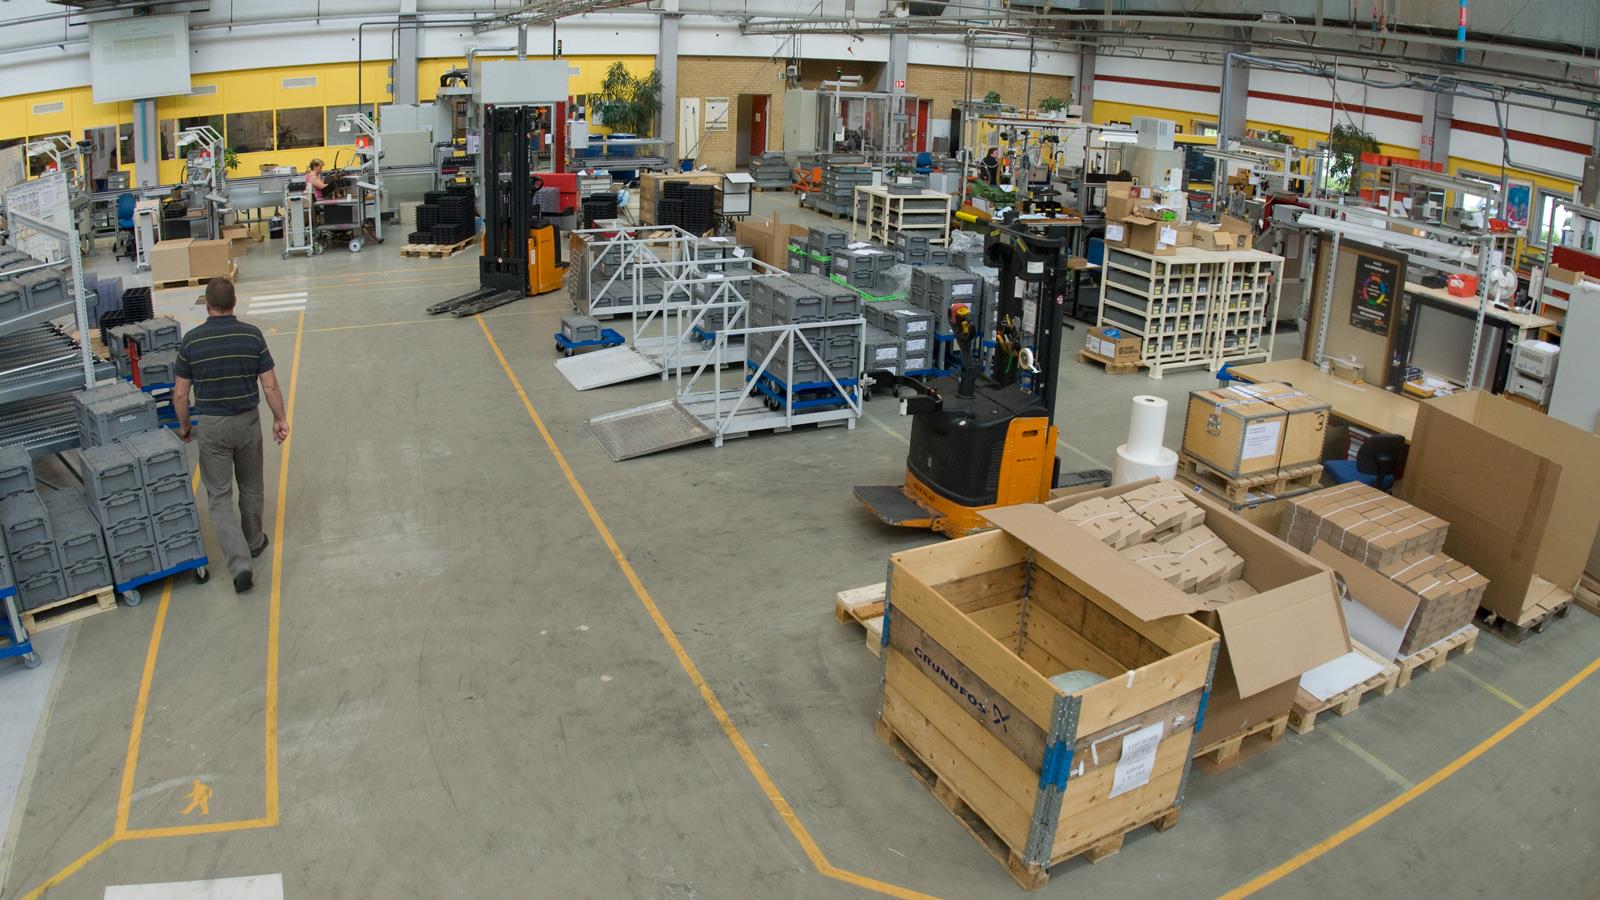 Production hall at Sauer-Danfoss and orange fork lift trucks